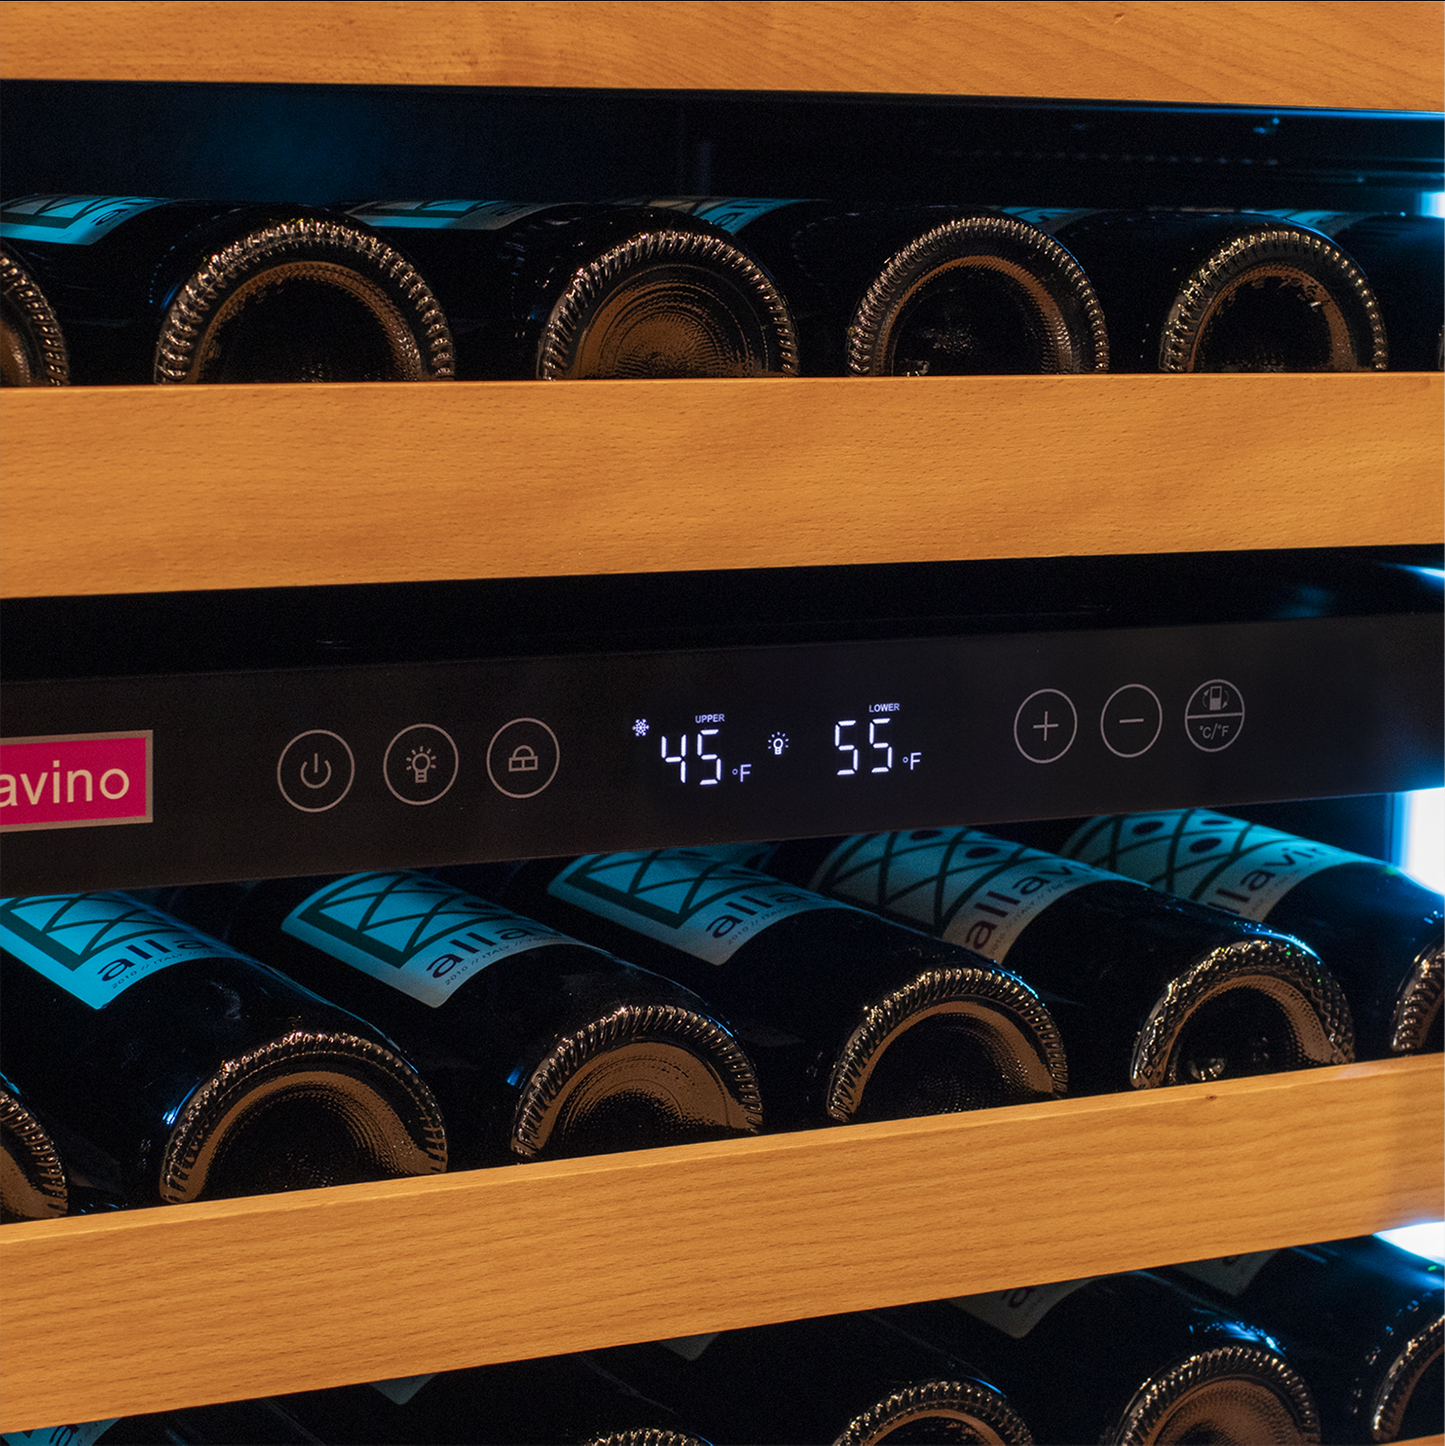 Allavino Reserva Series 154 Bottle Dual Zone Wine Refrigerator Cooler with Right Hinge Black Glass Door